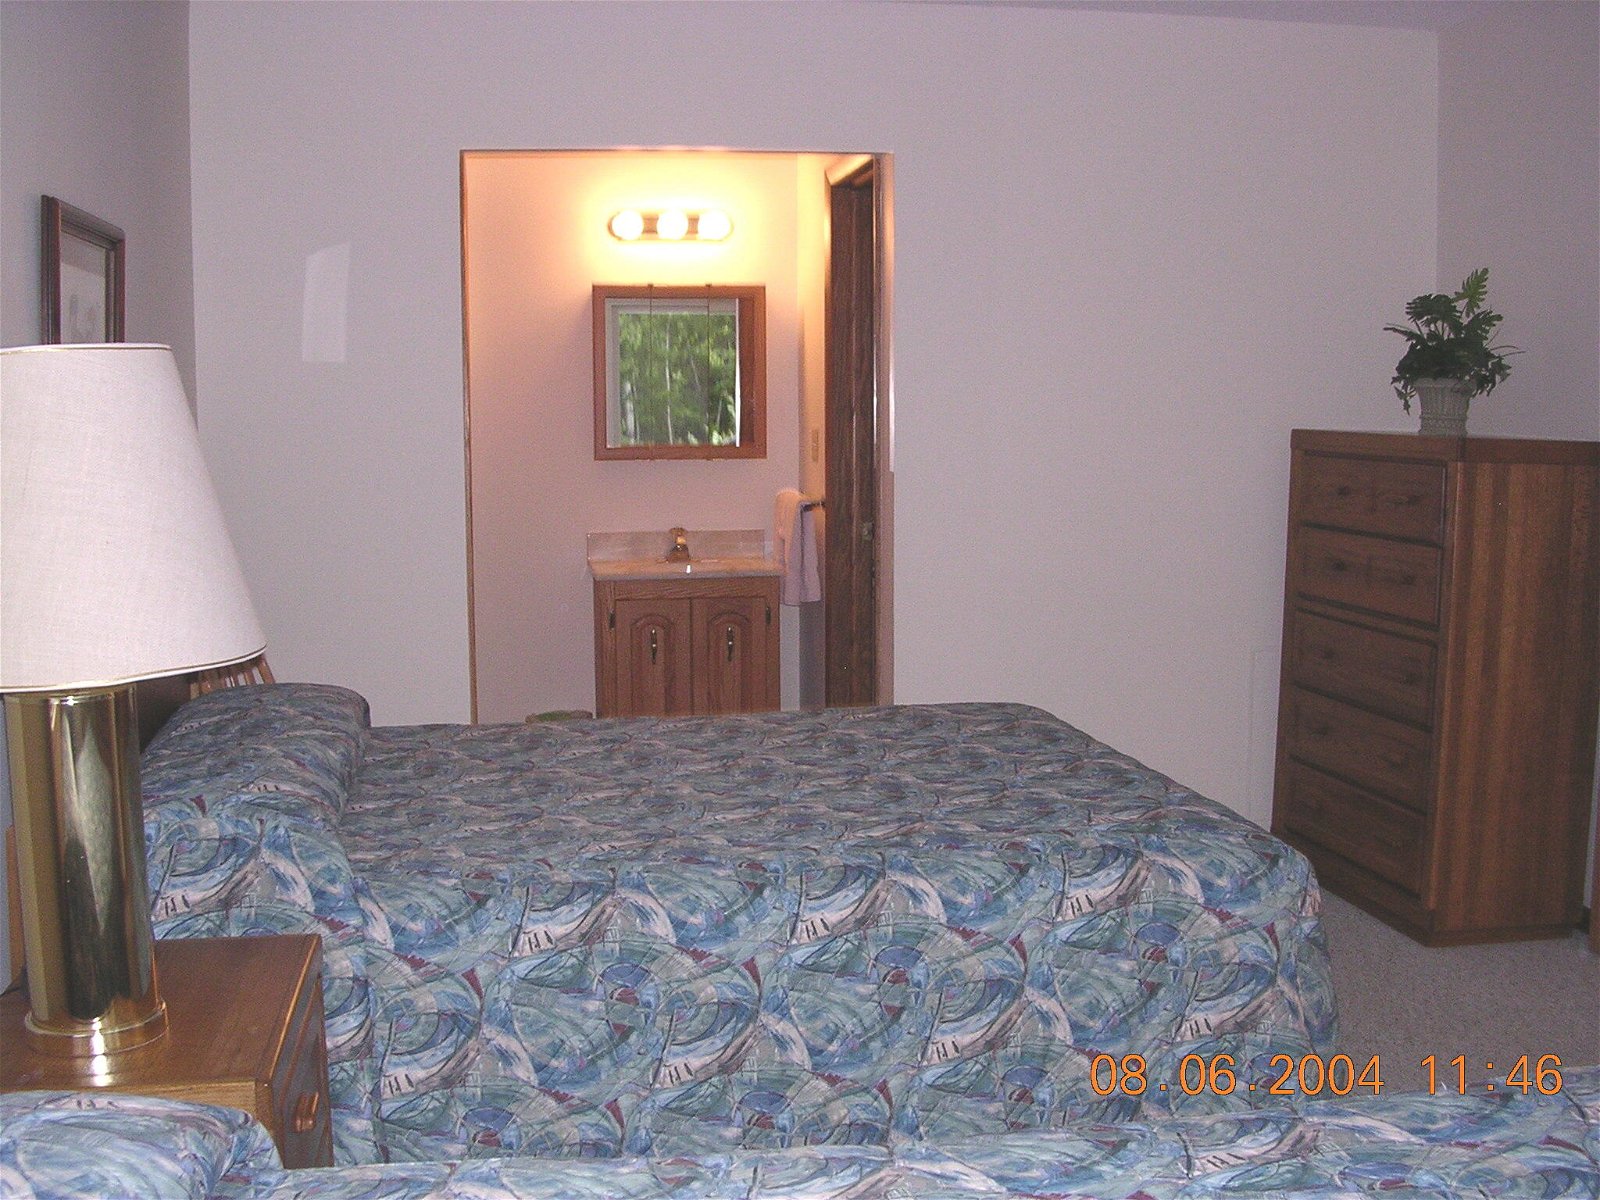 Quadna Mountain Resort - Unit Bedroom